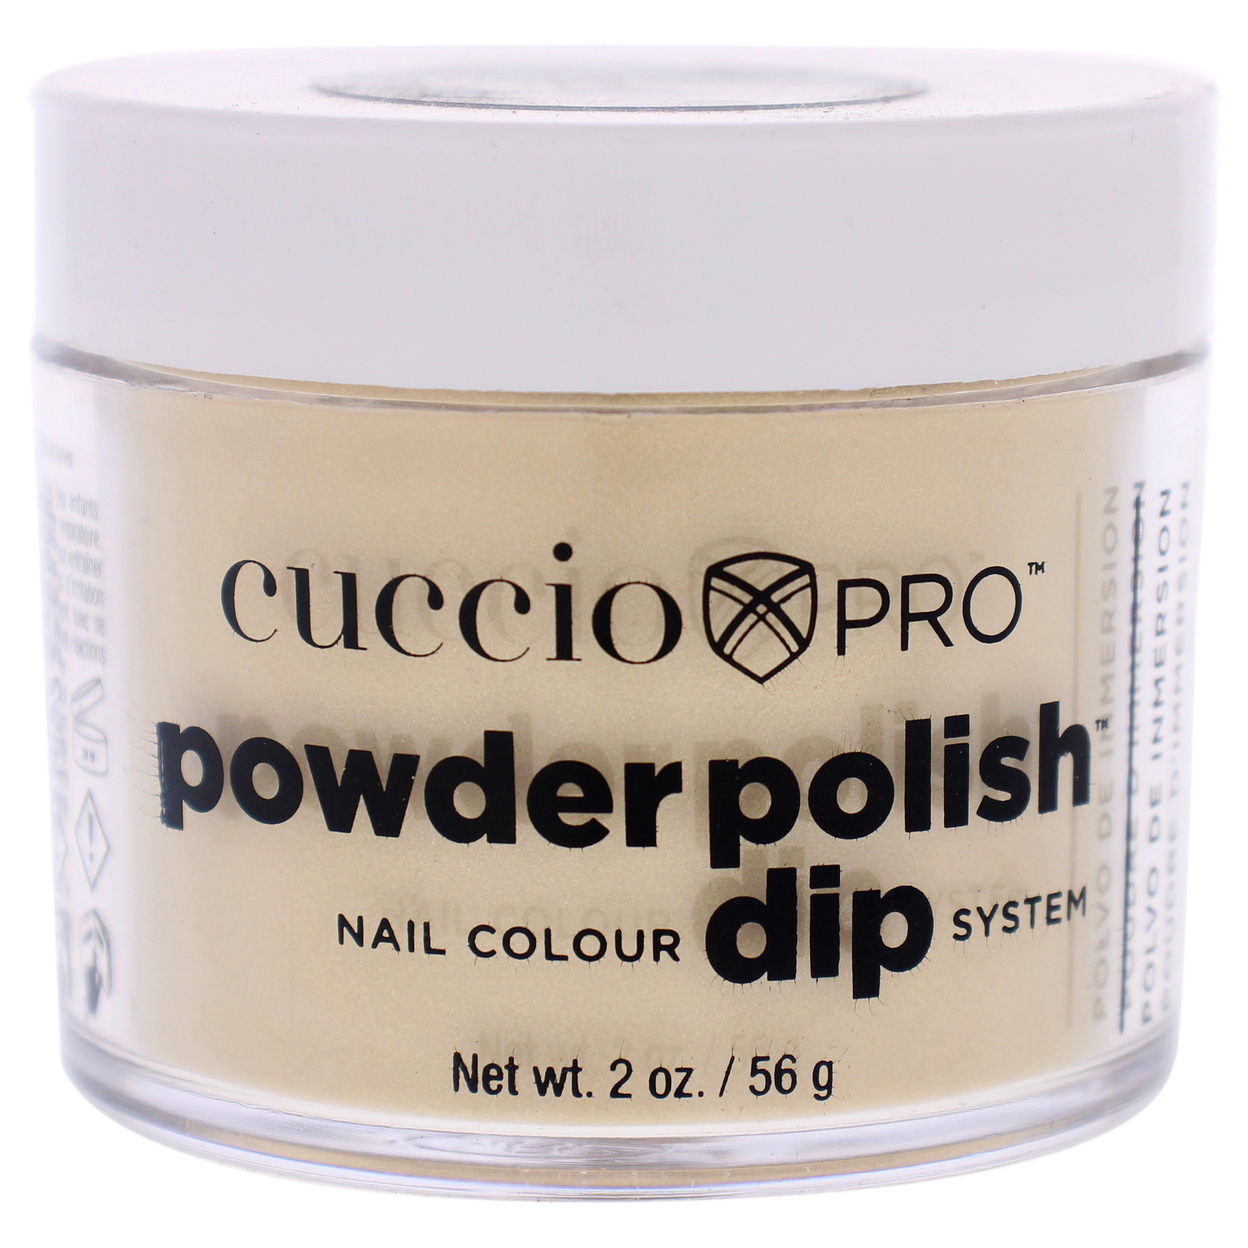 Cuccio Colour Pro Powder Polish Nail Colour Dip System - Metallic Lemon Gold Nail Powder 1.6 Oz